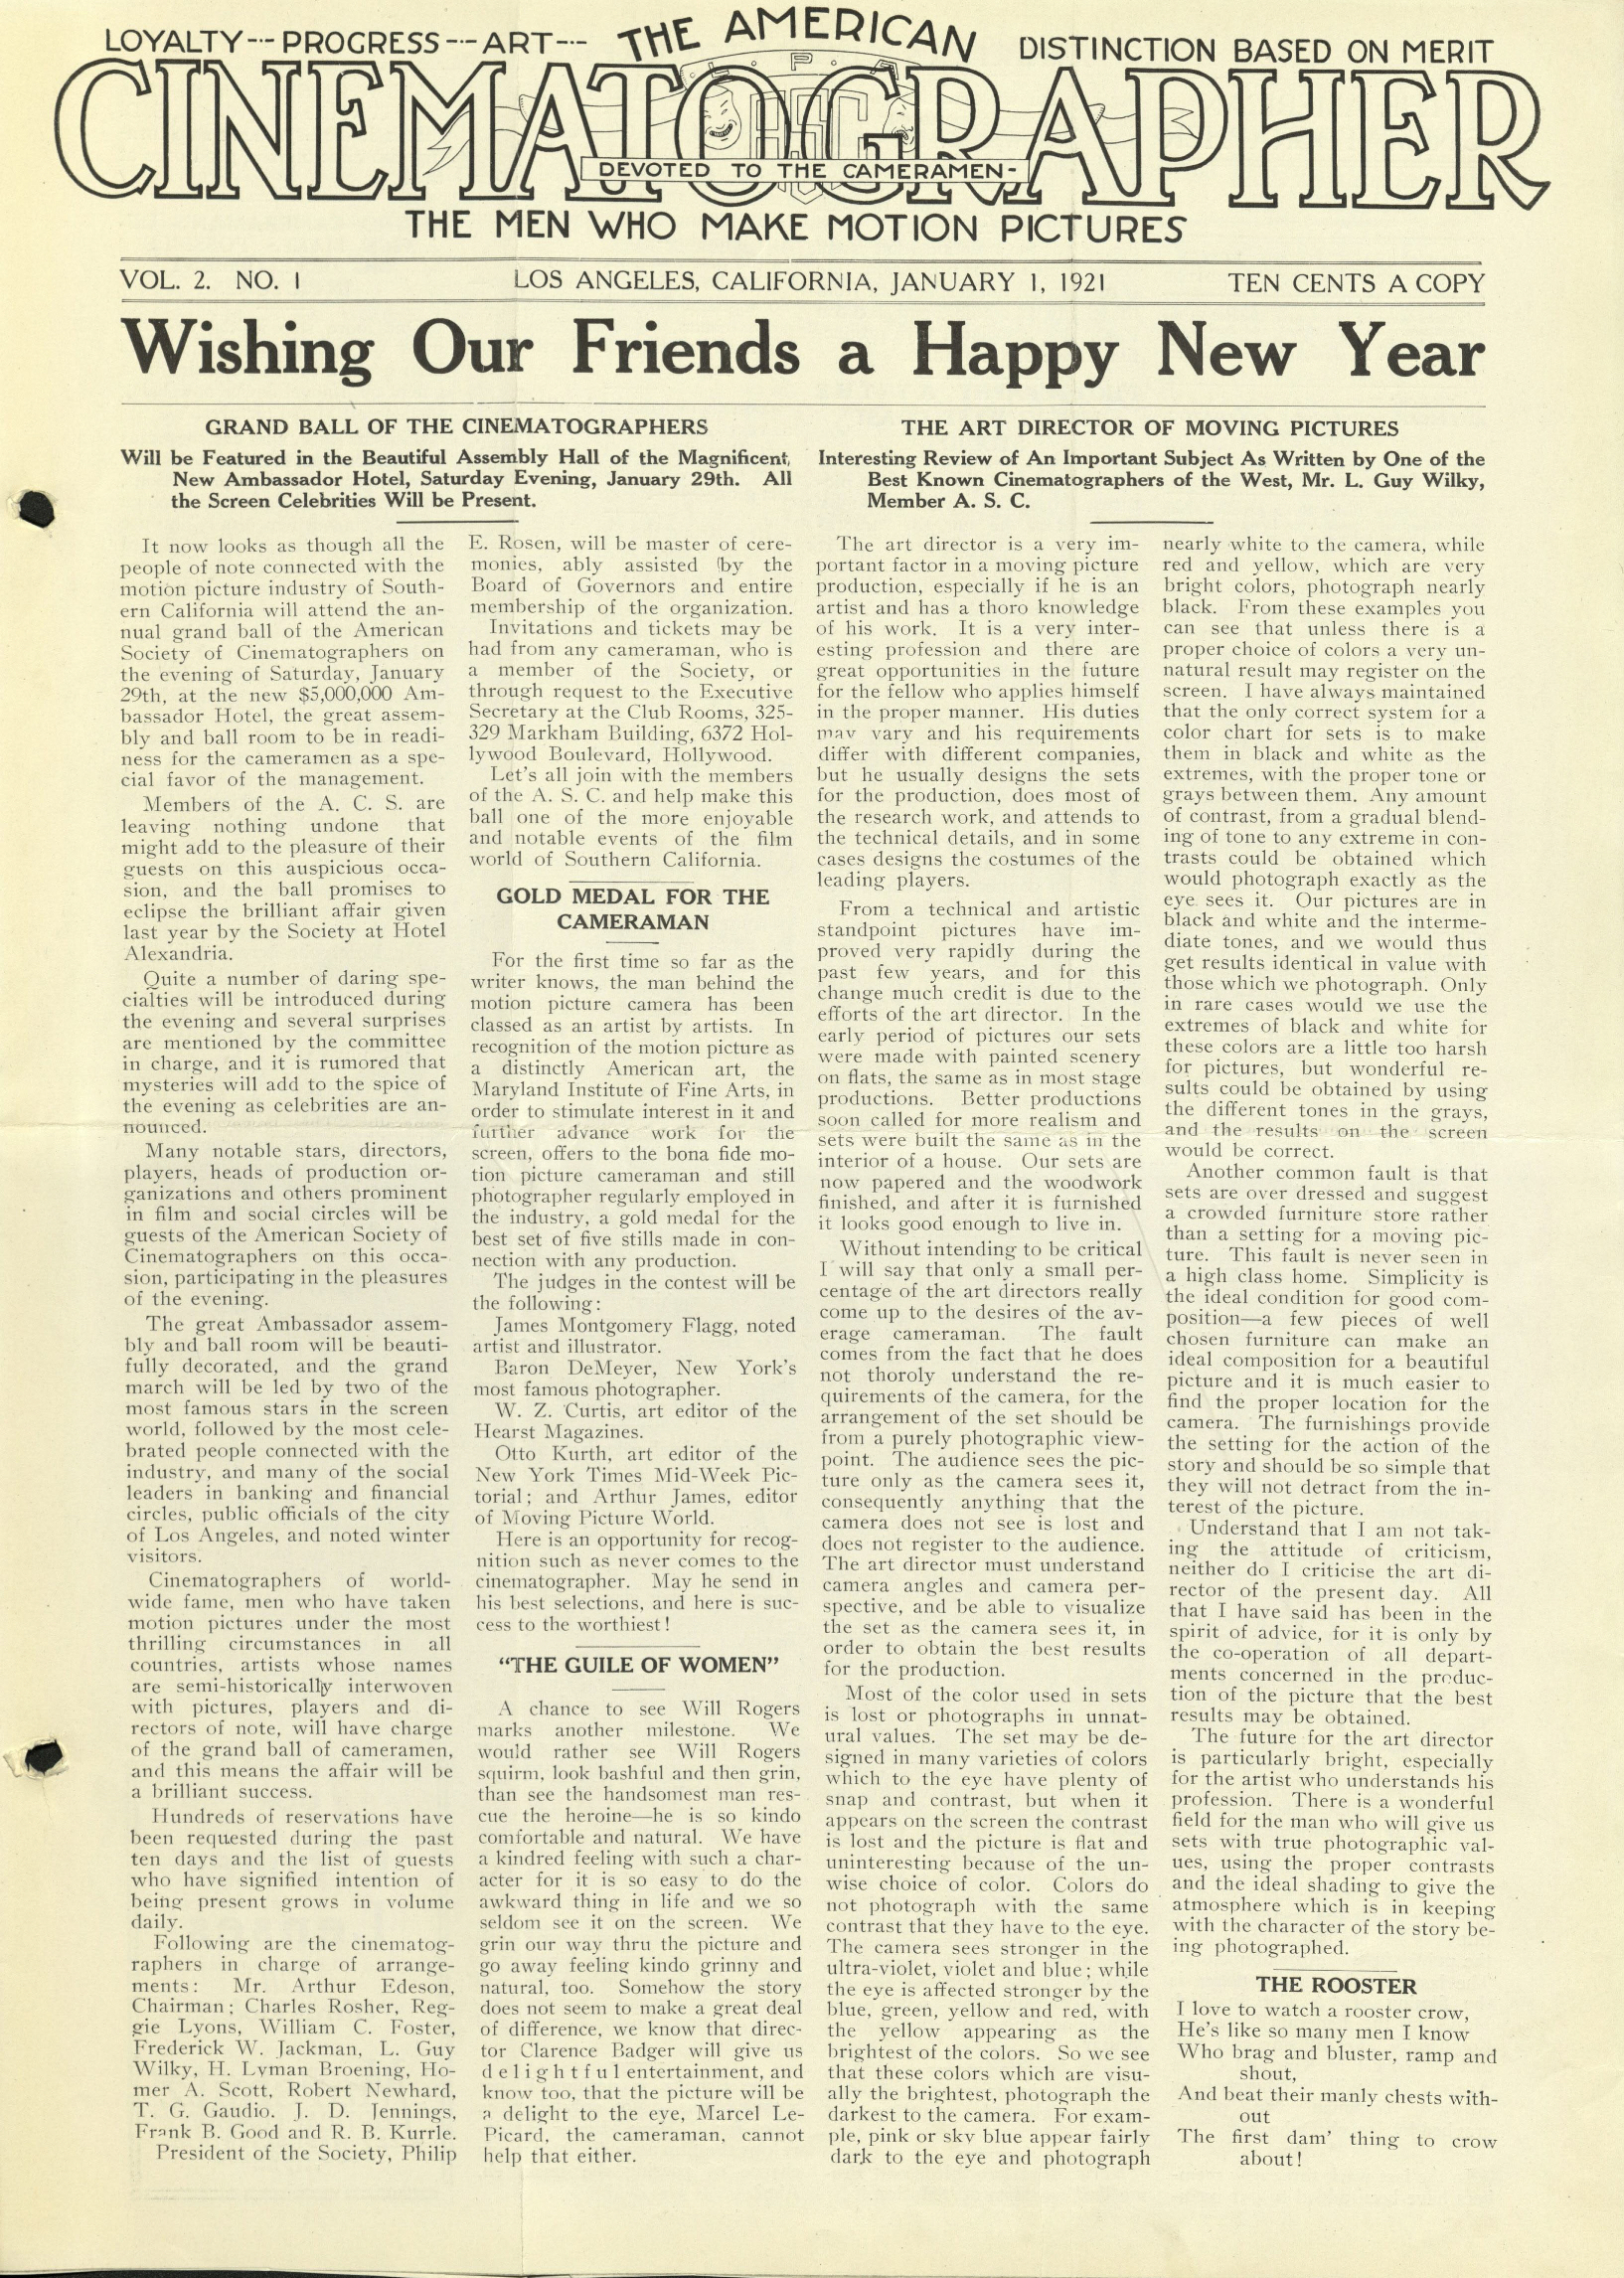 January 1, 1921